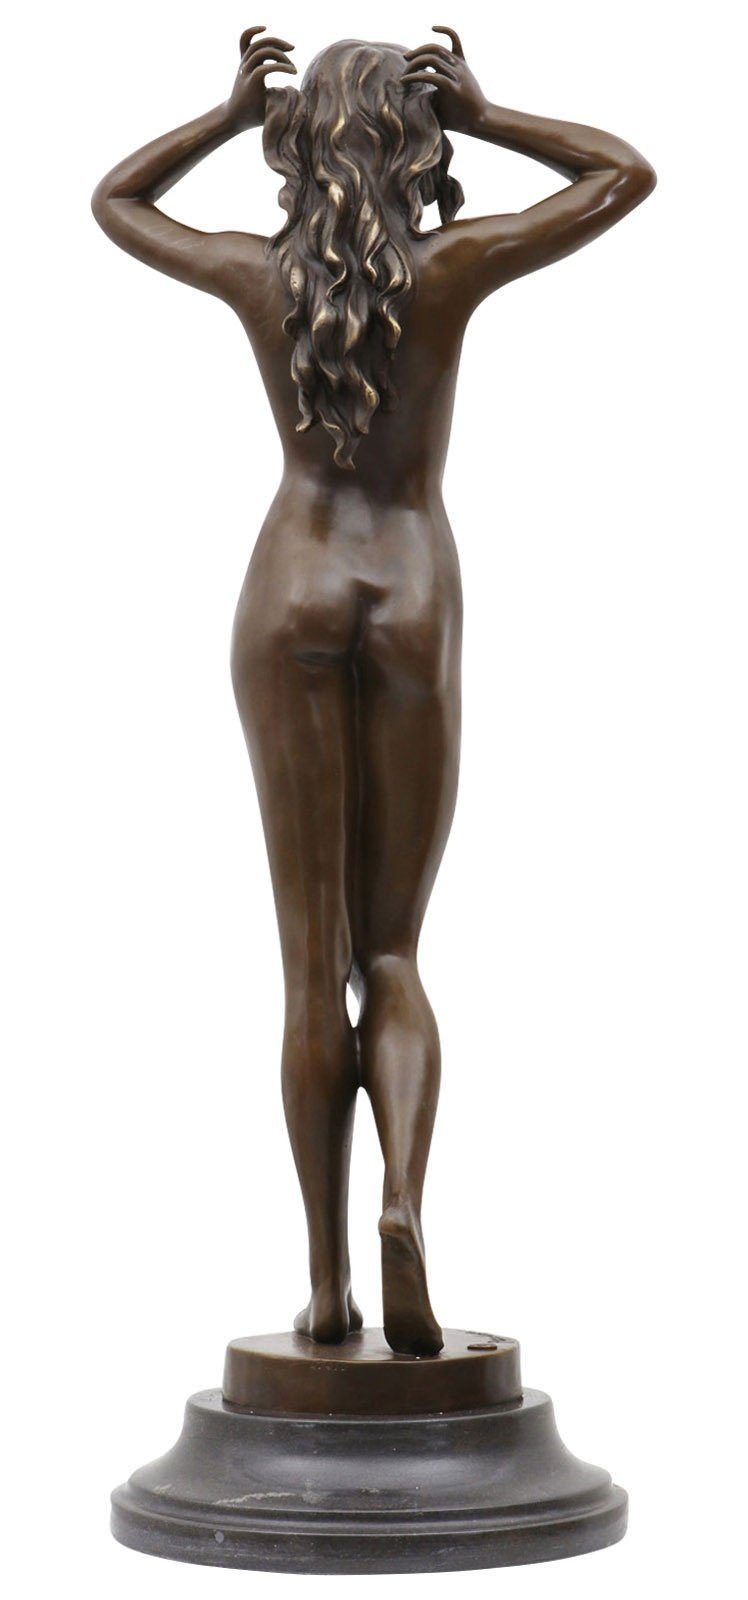 Antik-Stil Sta Erotik Aubaho Figur Frau Skulptur erotische Kunst Bronzeskulptur Bronze